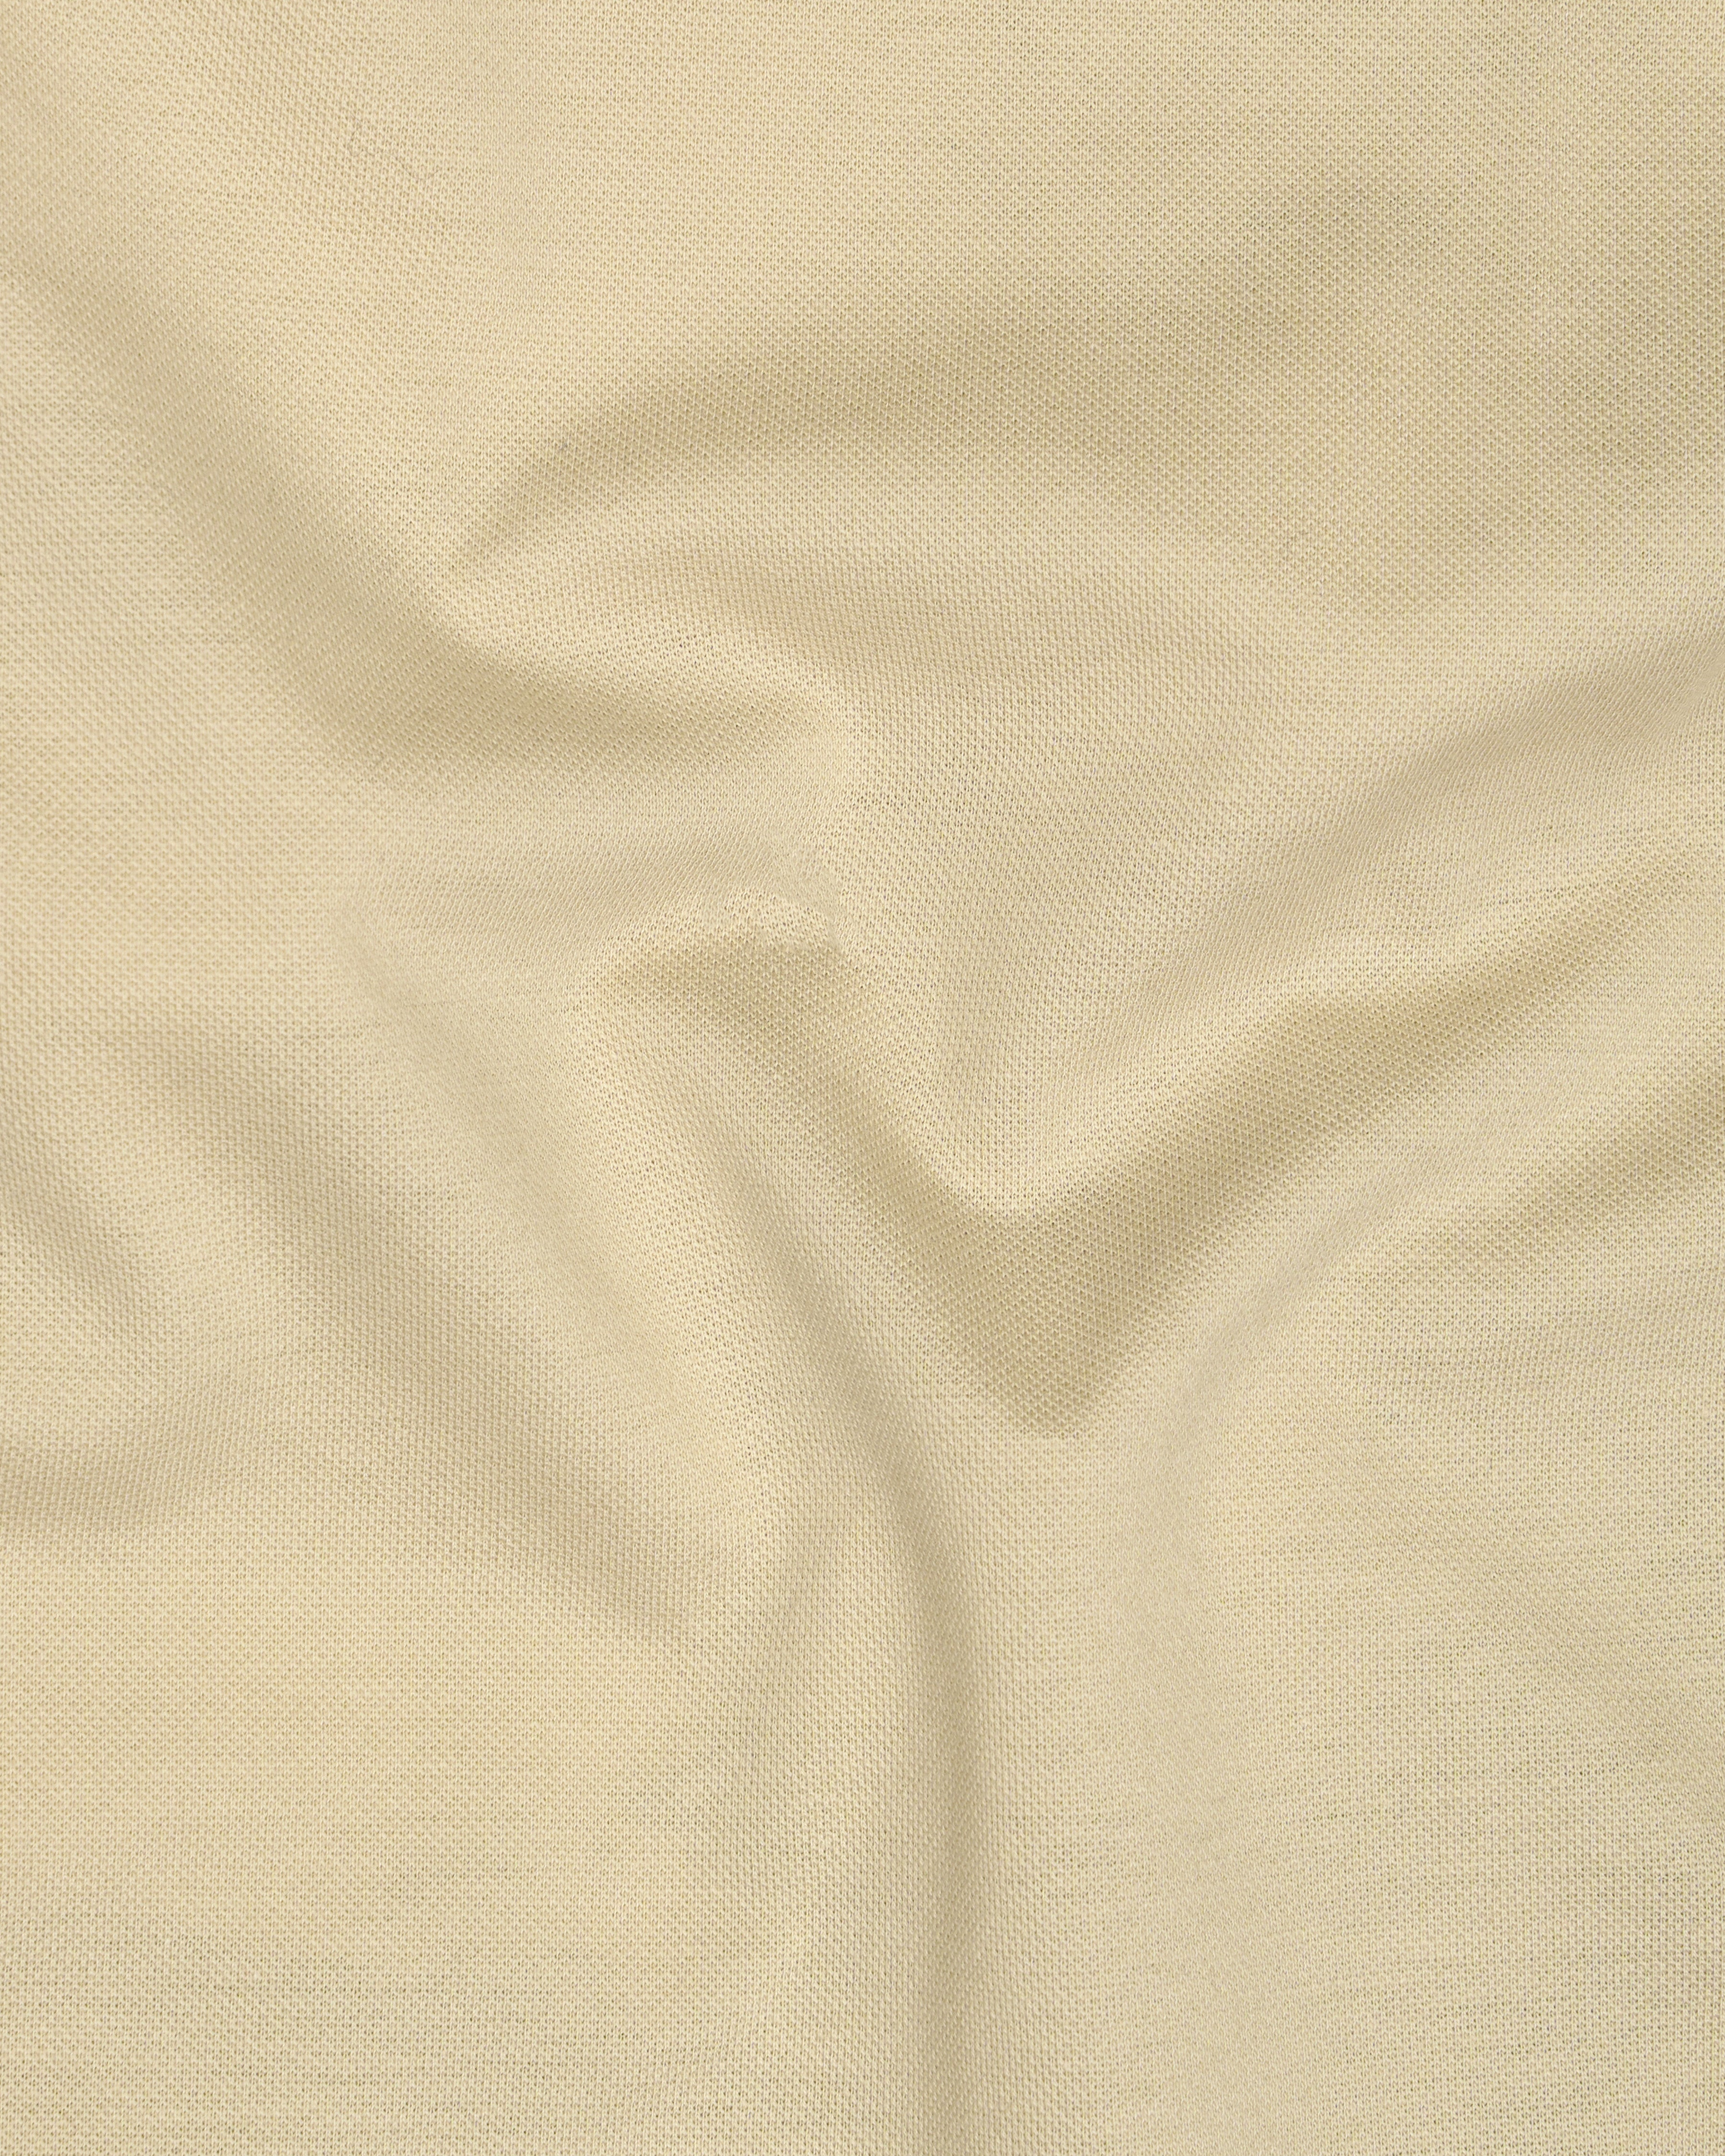 Pavlova Brown Organic Cotton Pique Polo TS851-S, TS851-M, TS851-L, TS851-XL, TS851-XXL